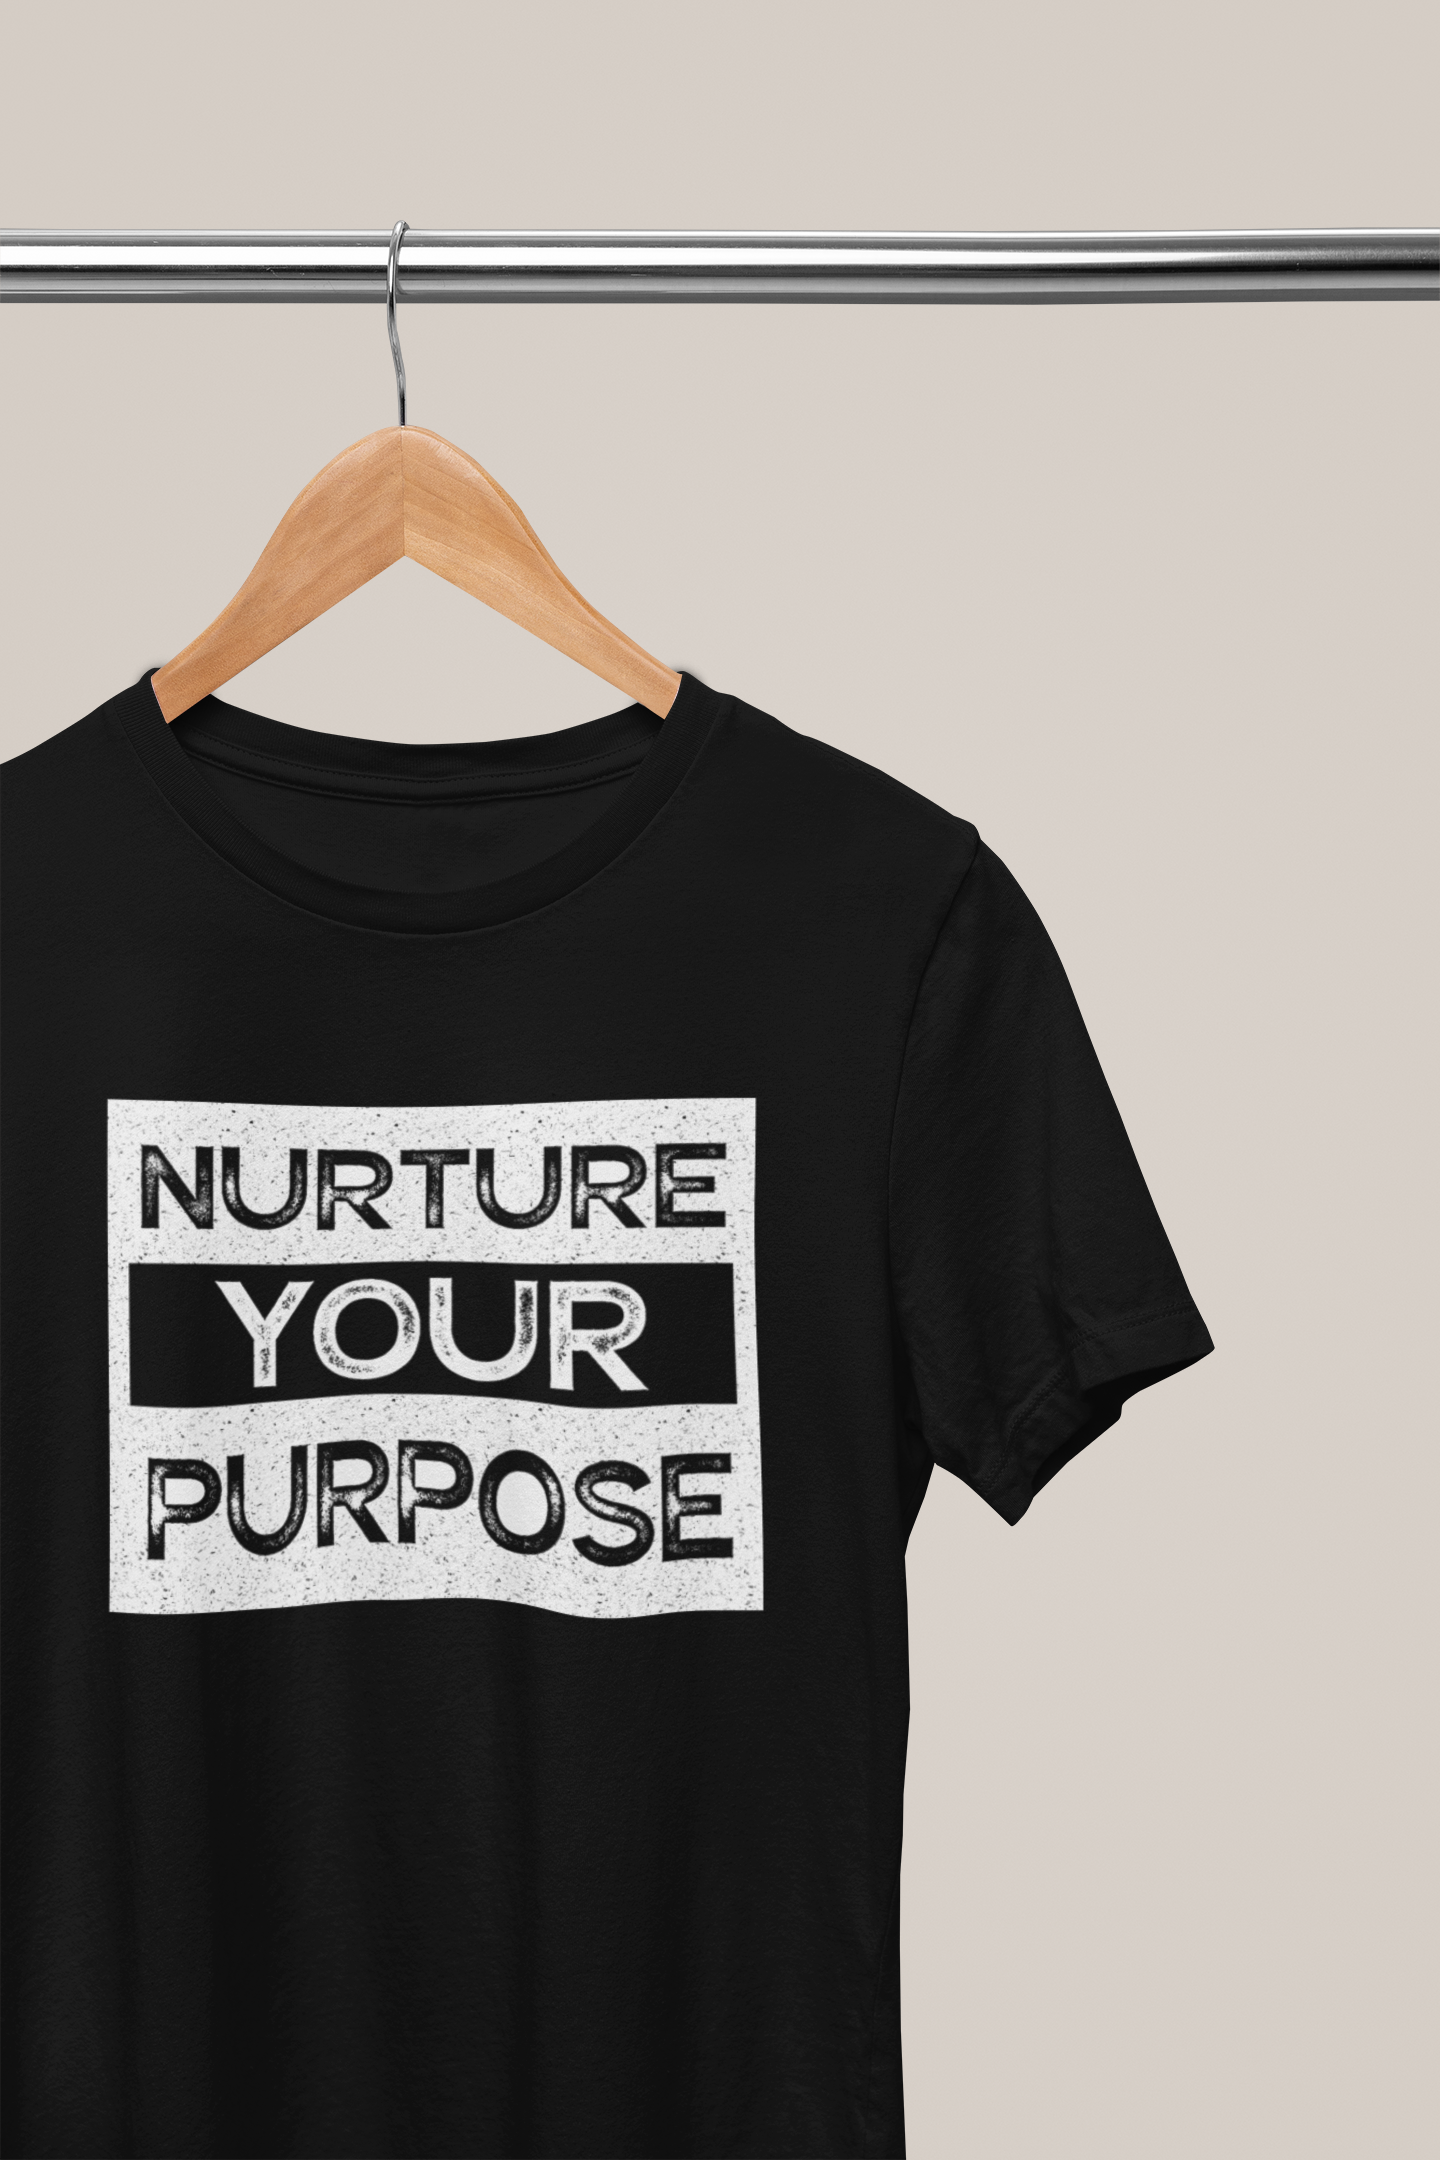 Nurture Your Purpose, Hoodies, Sweatshirts, Tees, and Mugs